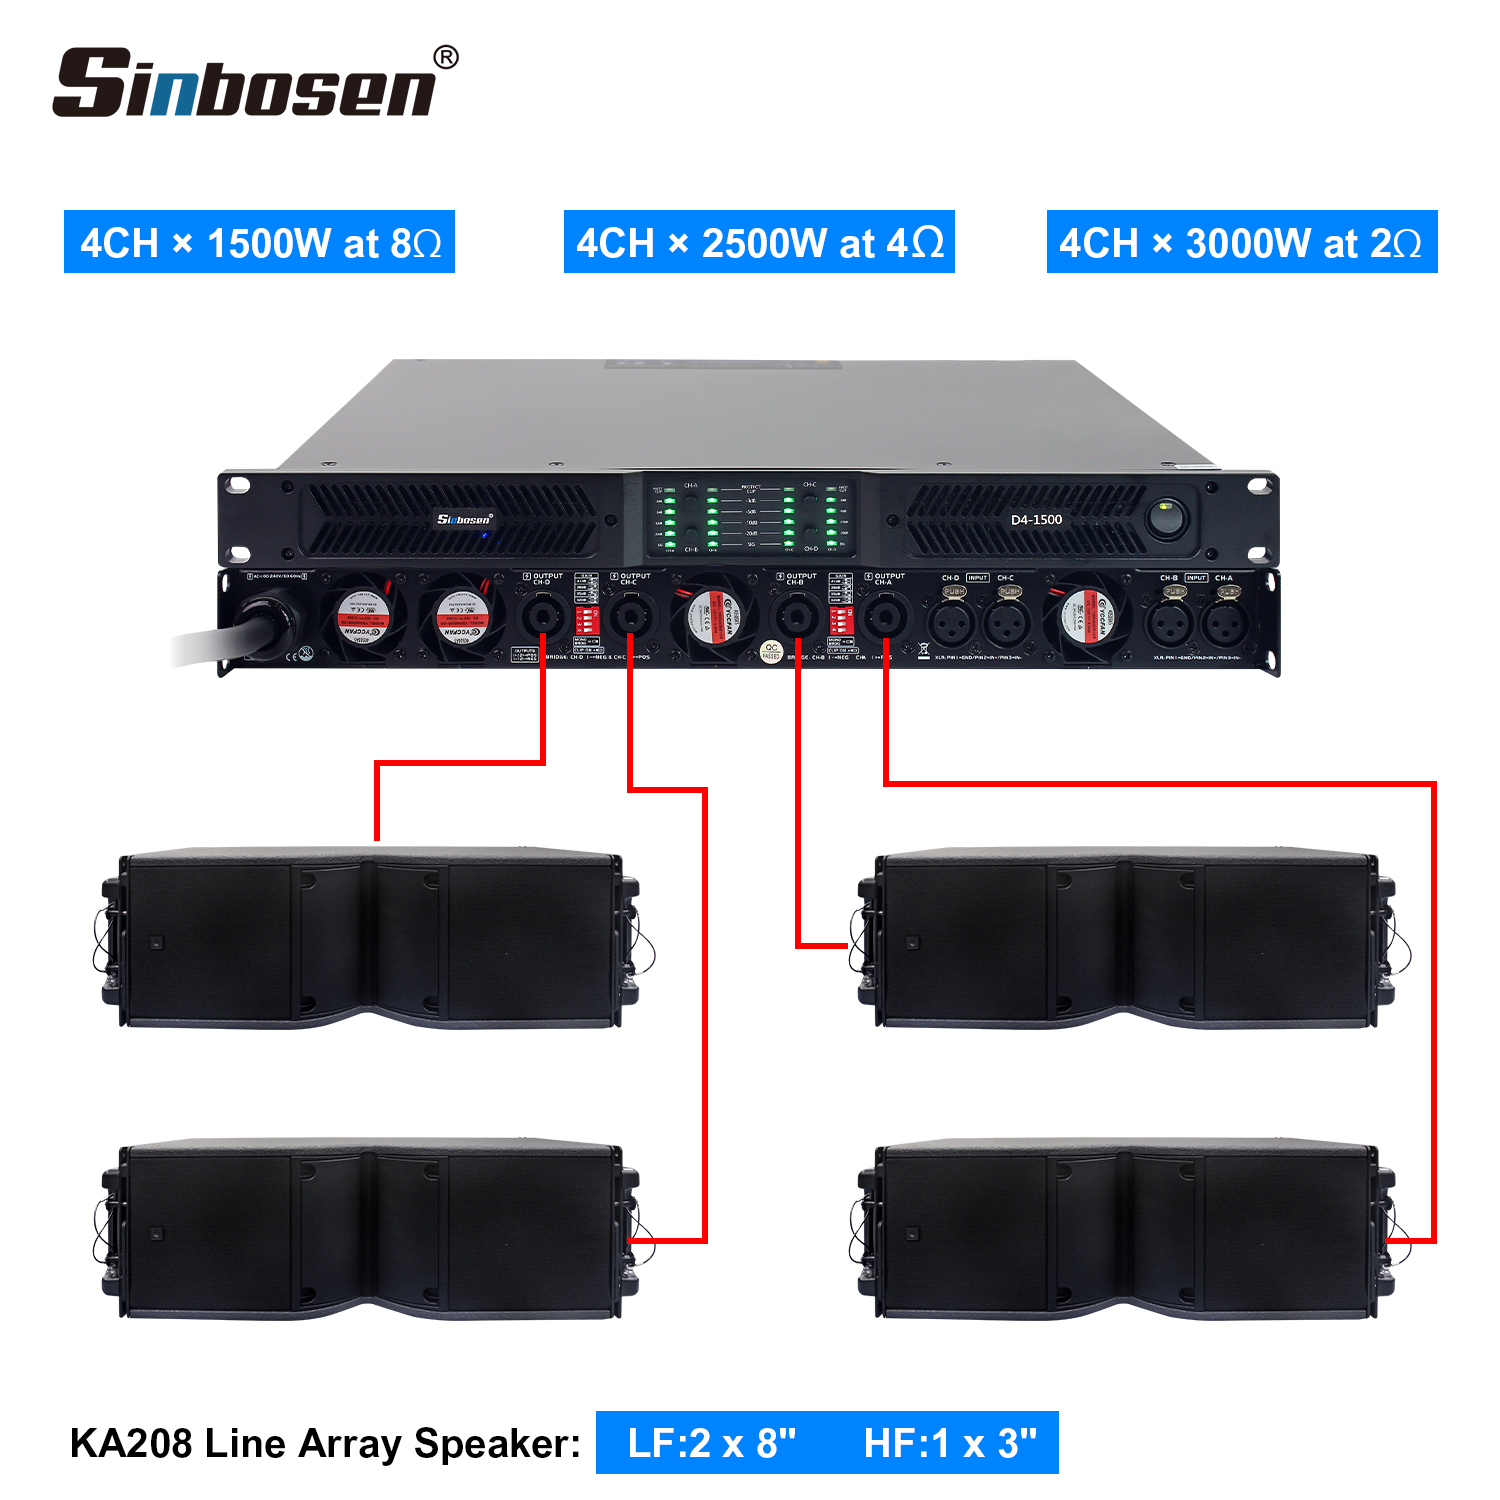 Sinbosen amplifier and speaker matching